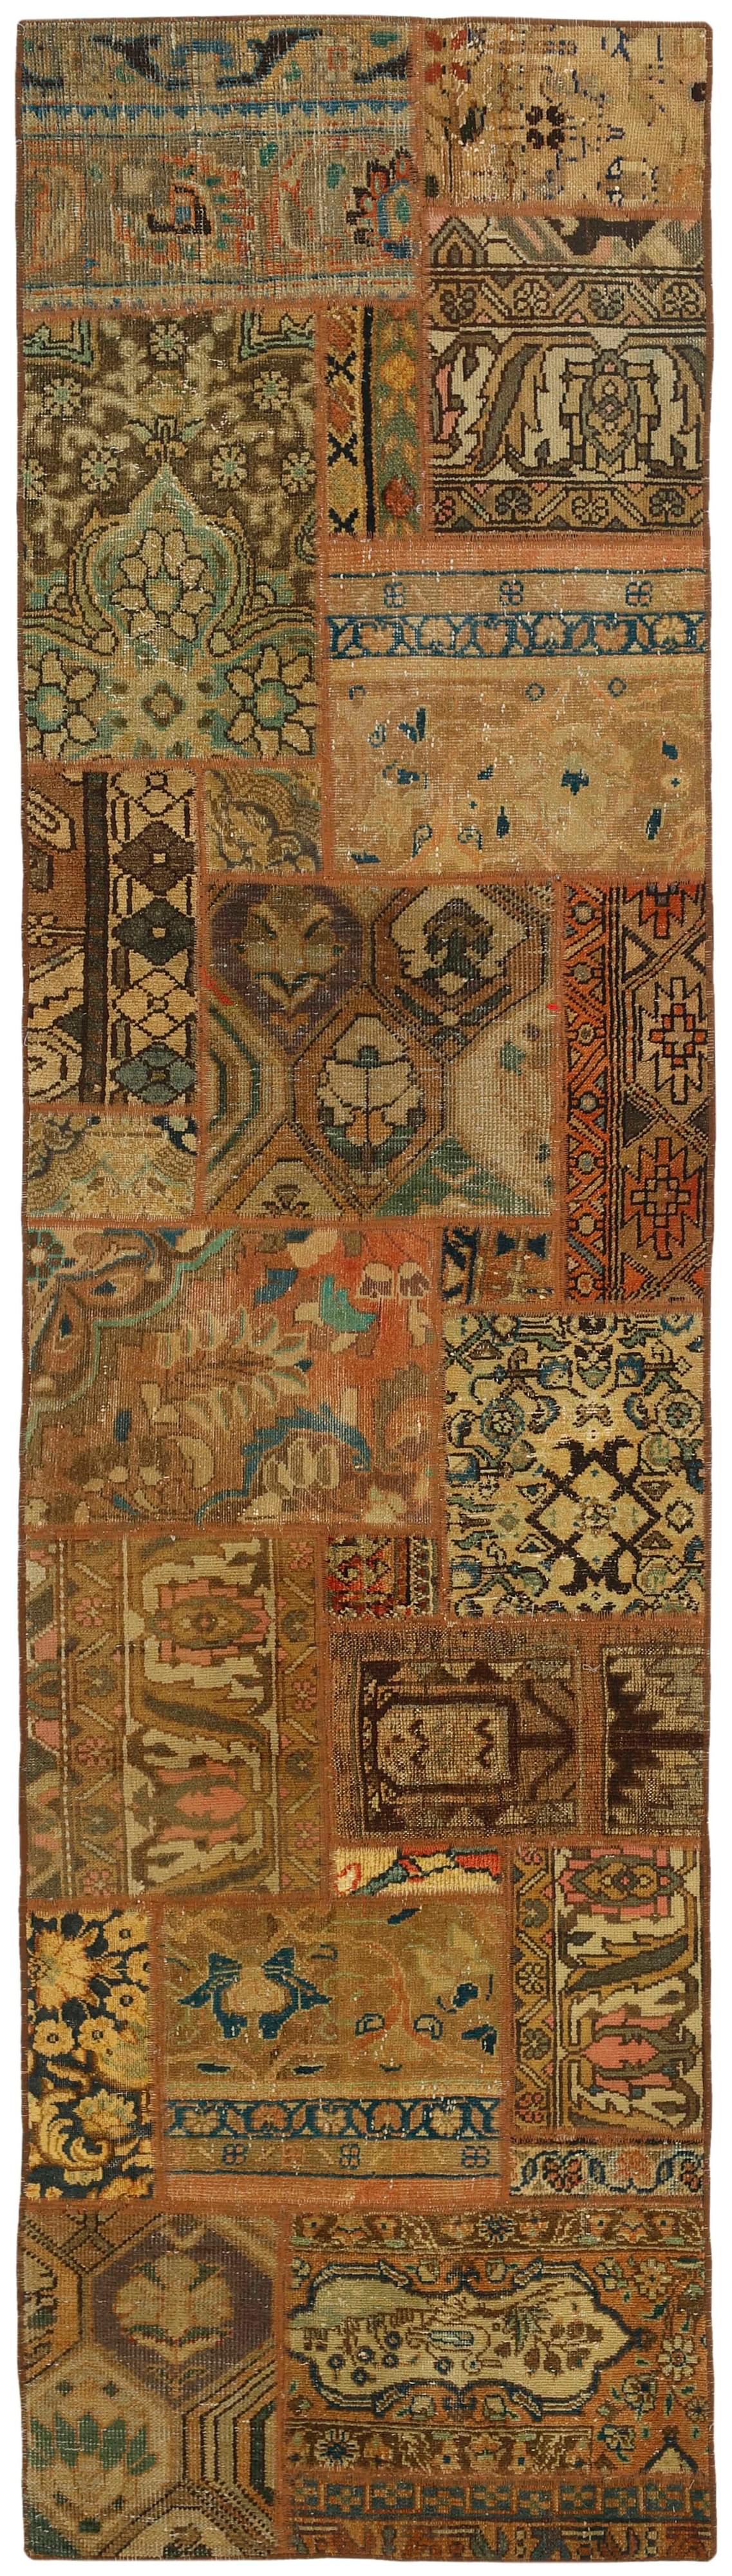 Authentic multicolour patchwork persian runner